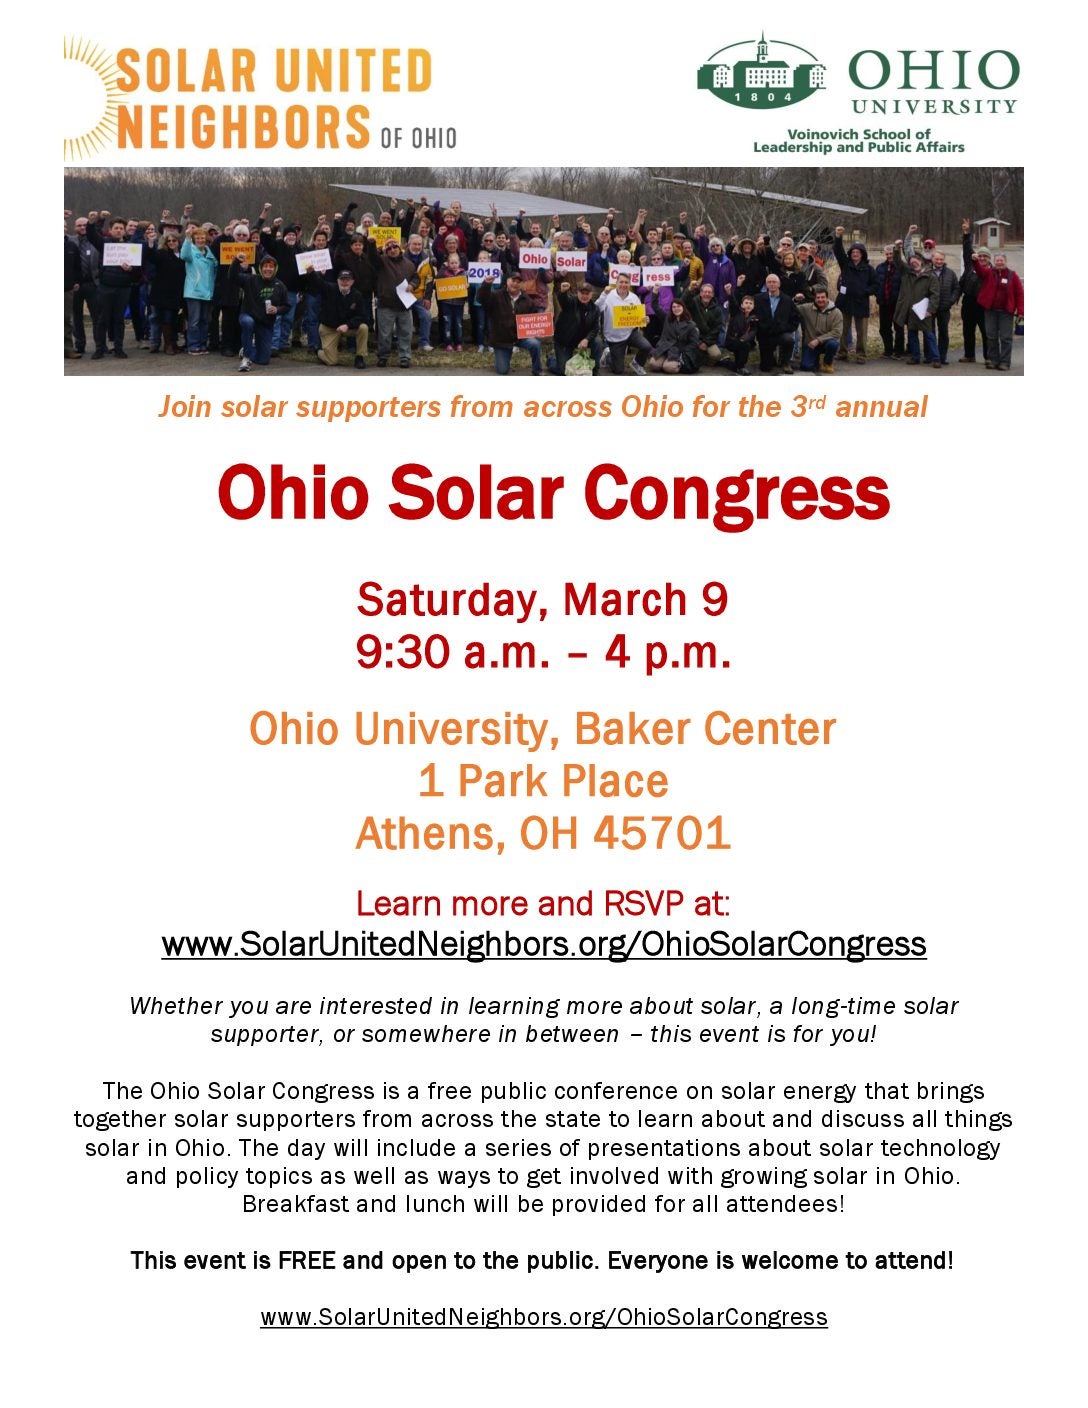 oh-solar-congress-flyer-solar-united-neighbors